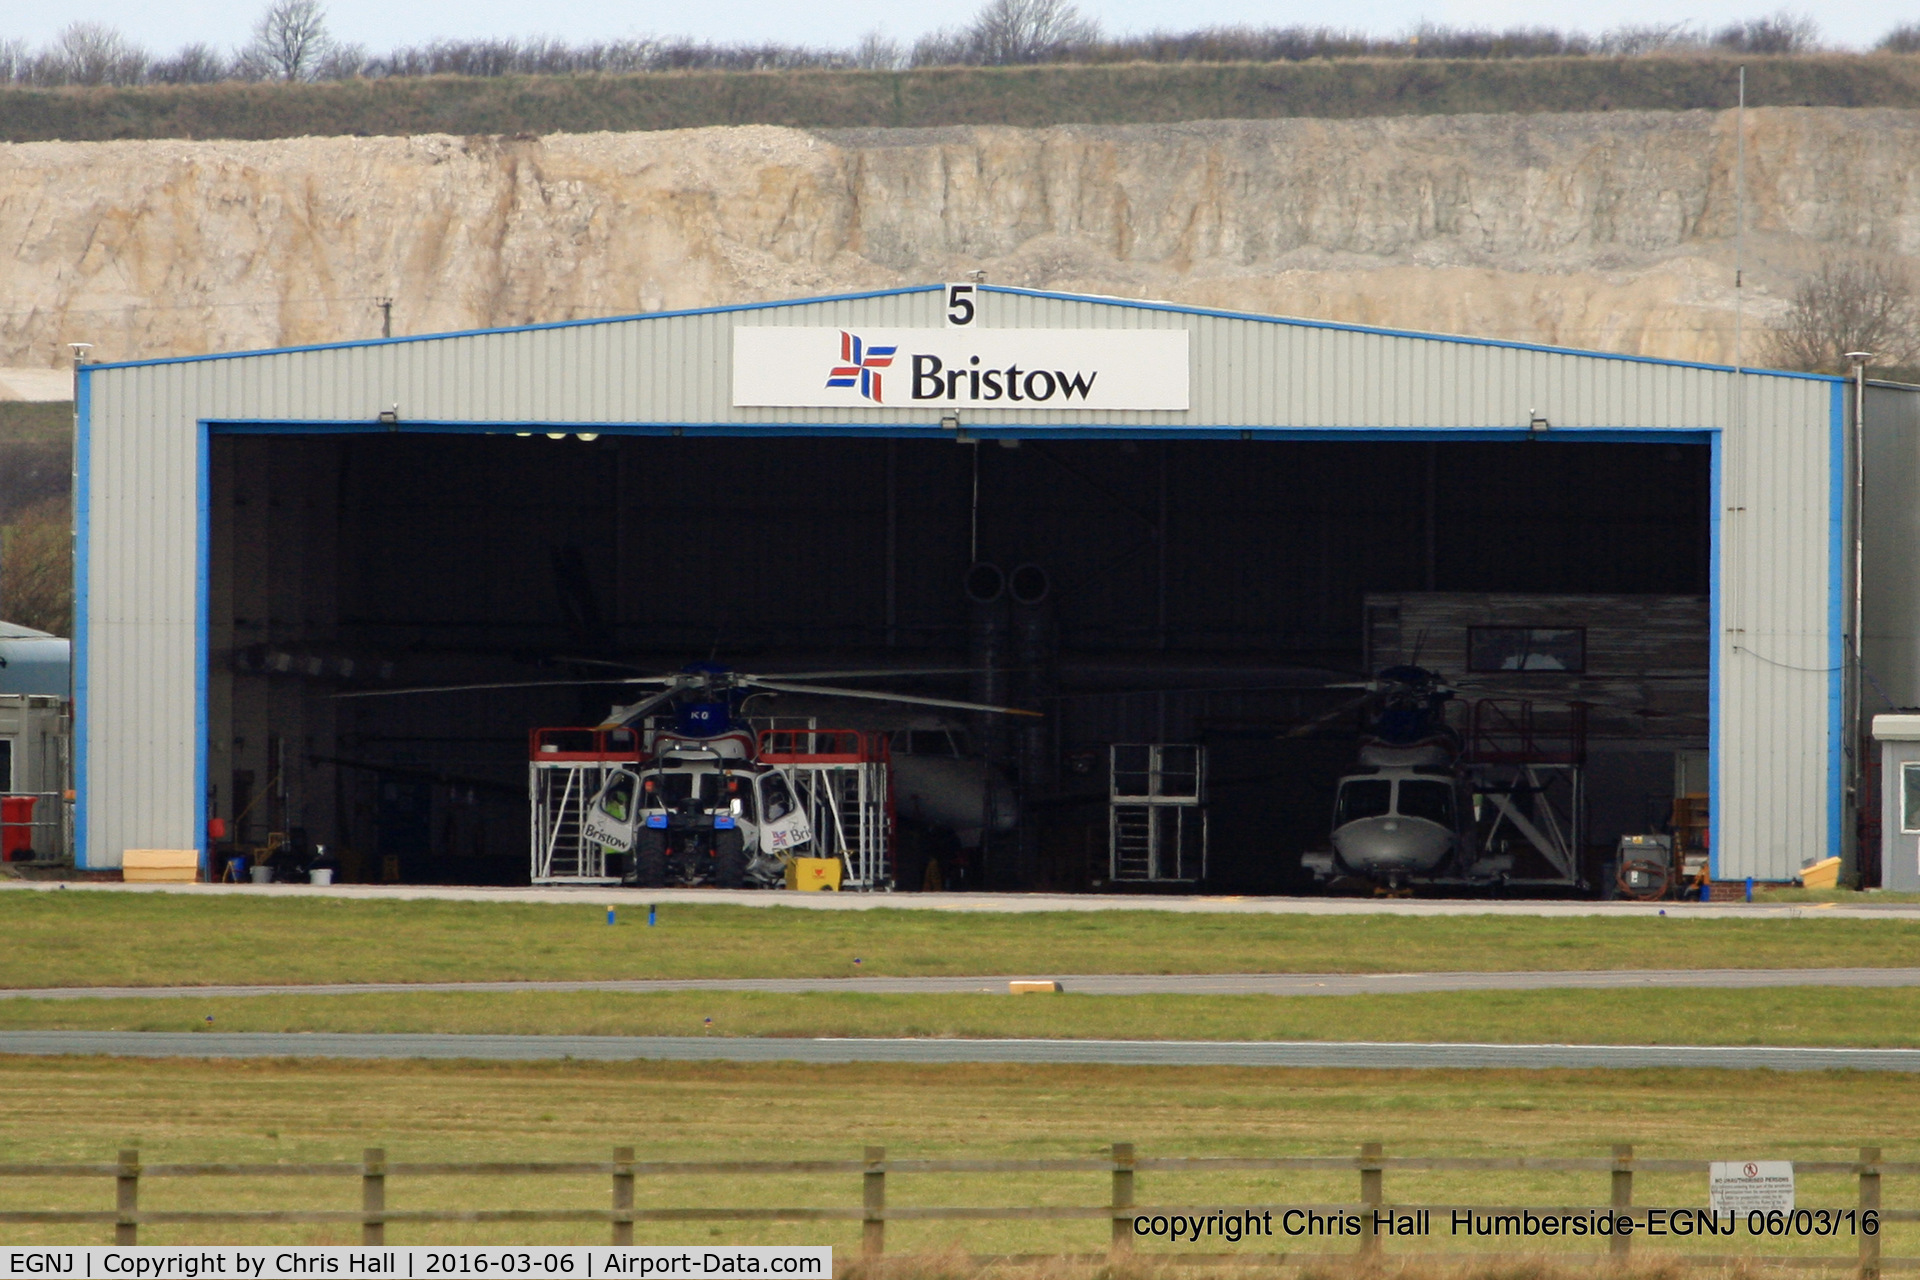 Humberside Airport, Kingston upon Hull, England United Kingdom (EGNJ) - Bristows hangar at Humberside